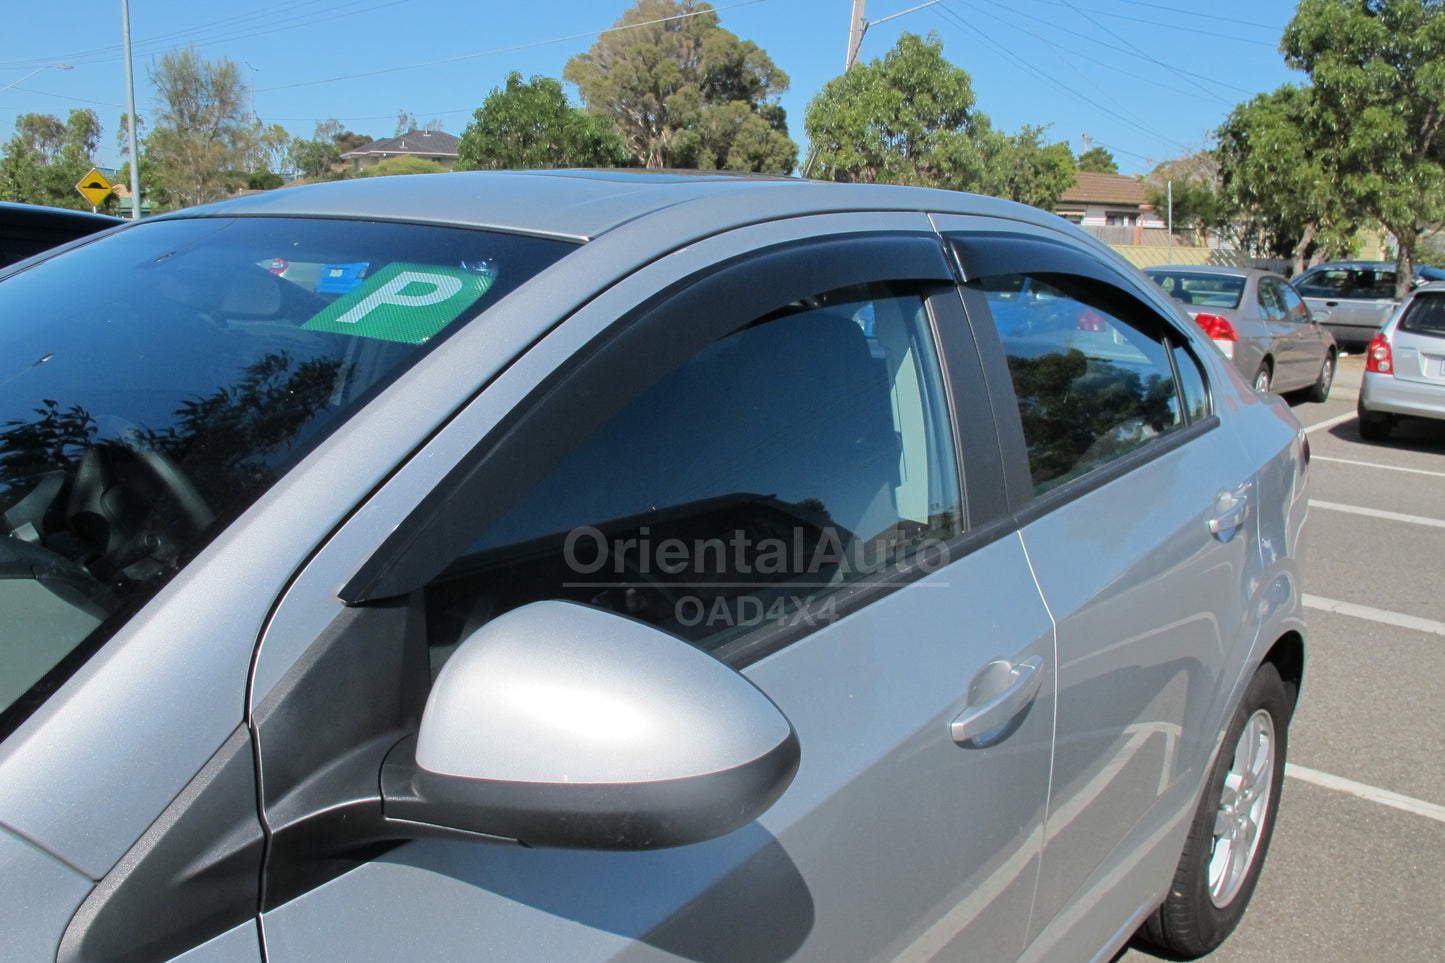 Premium Weathershields Weather Shields Window Visor For Holden Barina Sedan TM Series 2012-2019